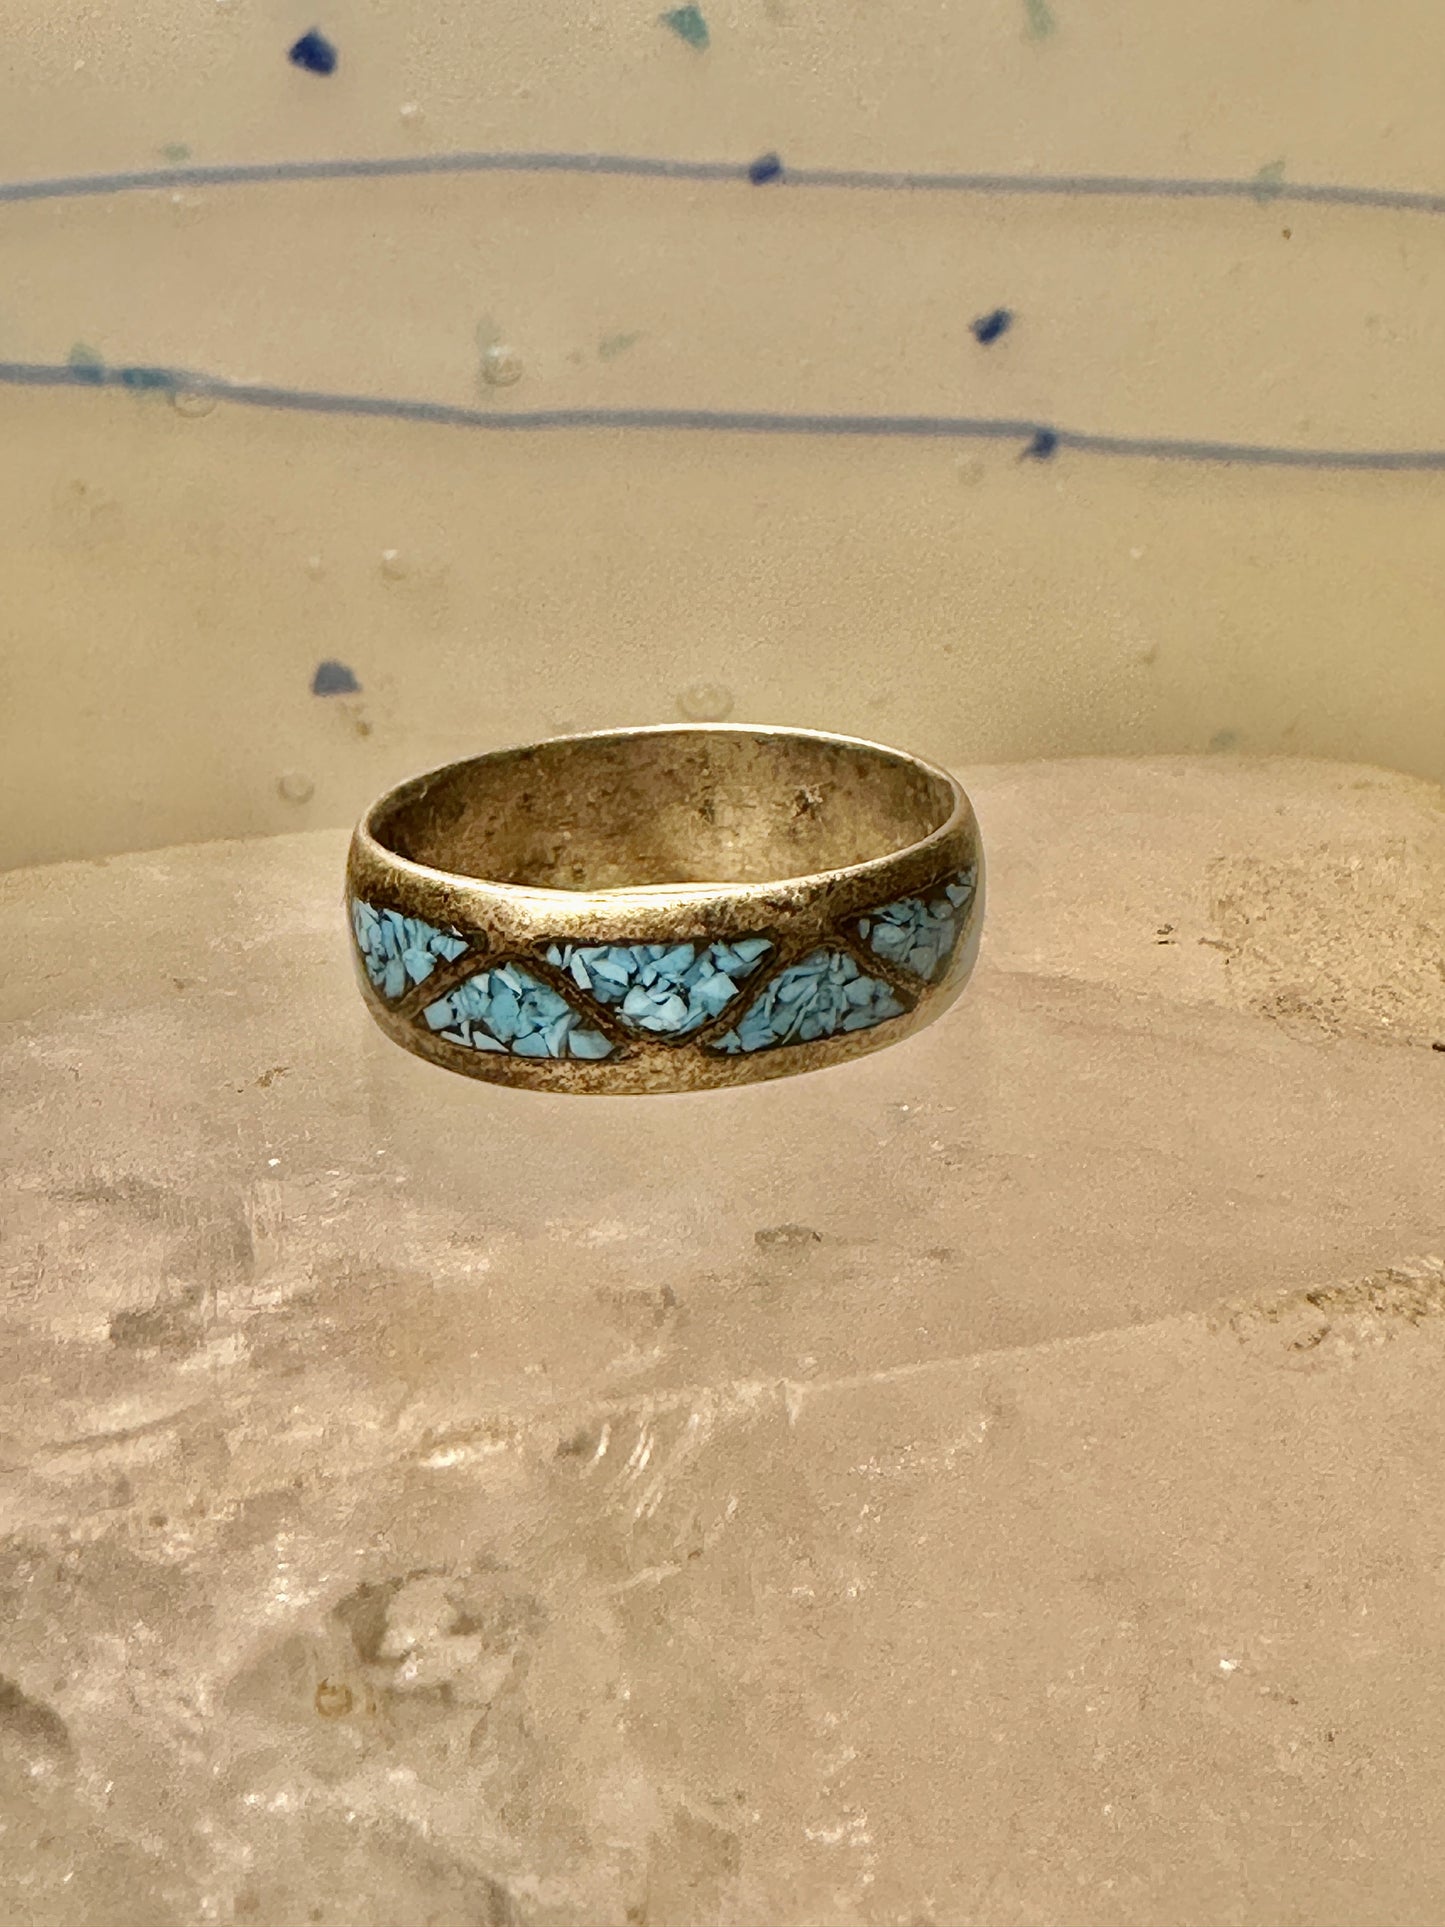 Zuni ring turquoise chips wedding band size 9.50 sterling silver women men